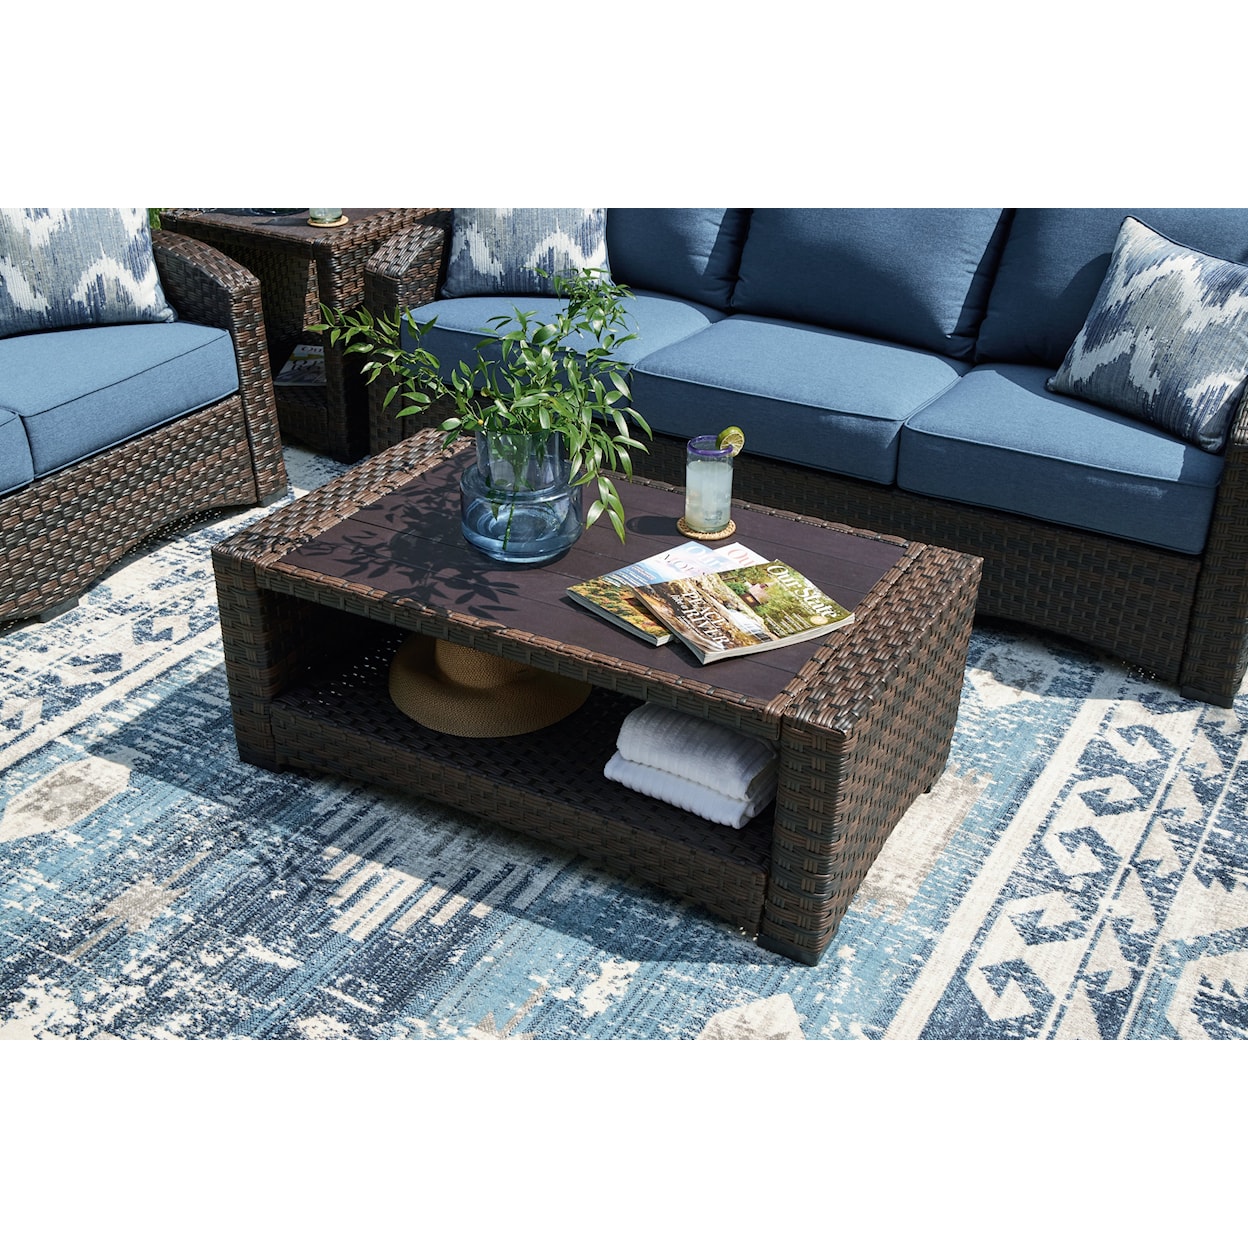 Ashley Furniture Signature Design Windglow Outdoor Rectangular Coffee Table